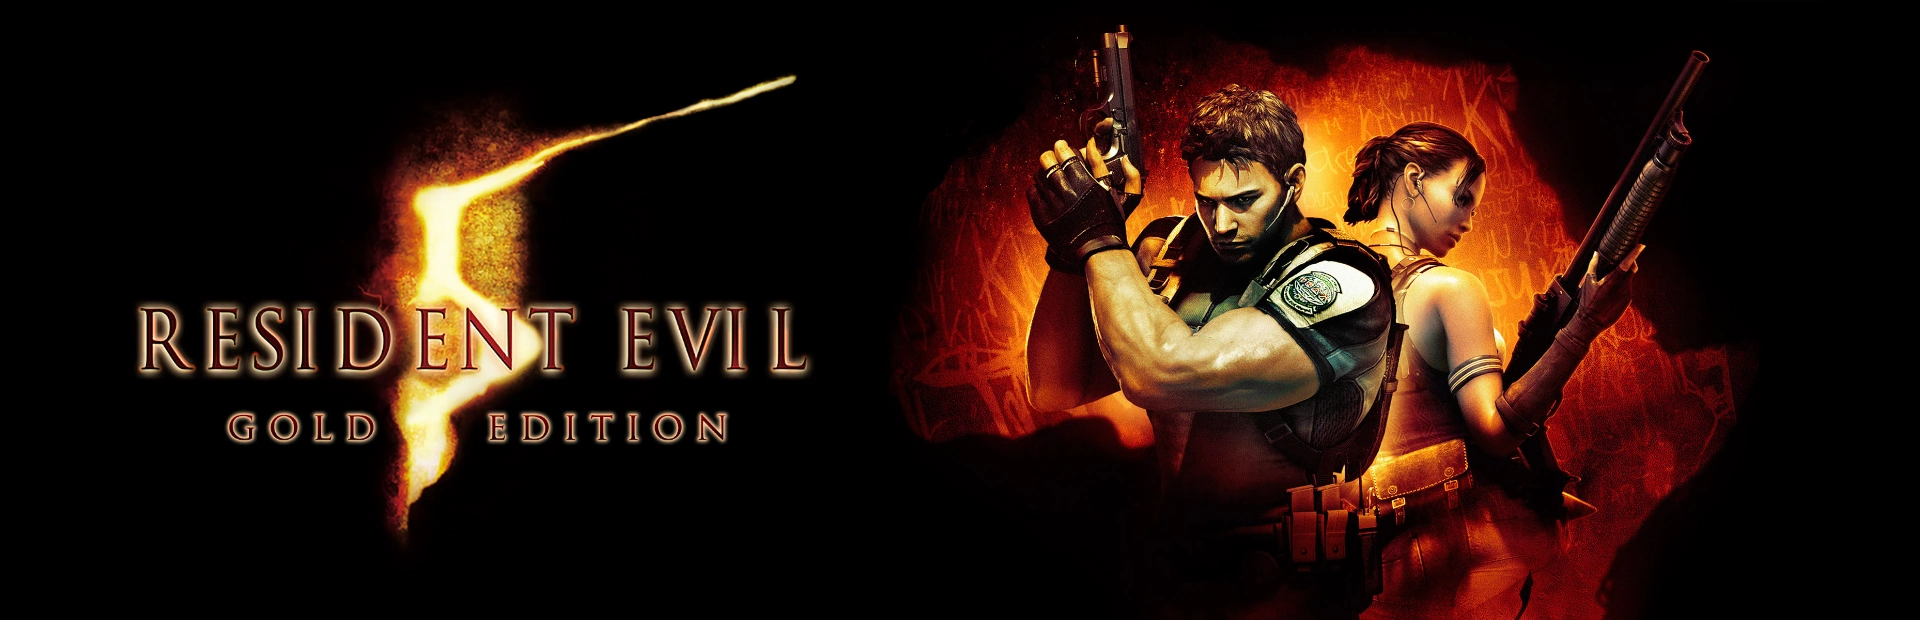 Resident.Evil 5.Gold .Edition.banner3